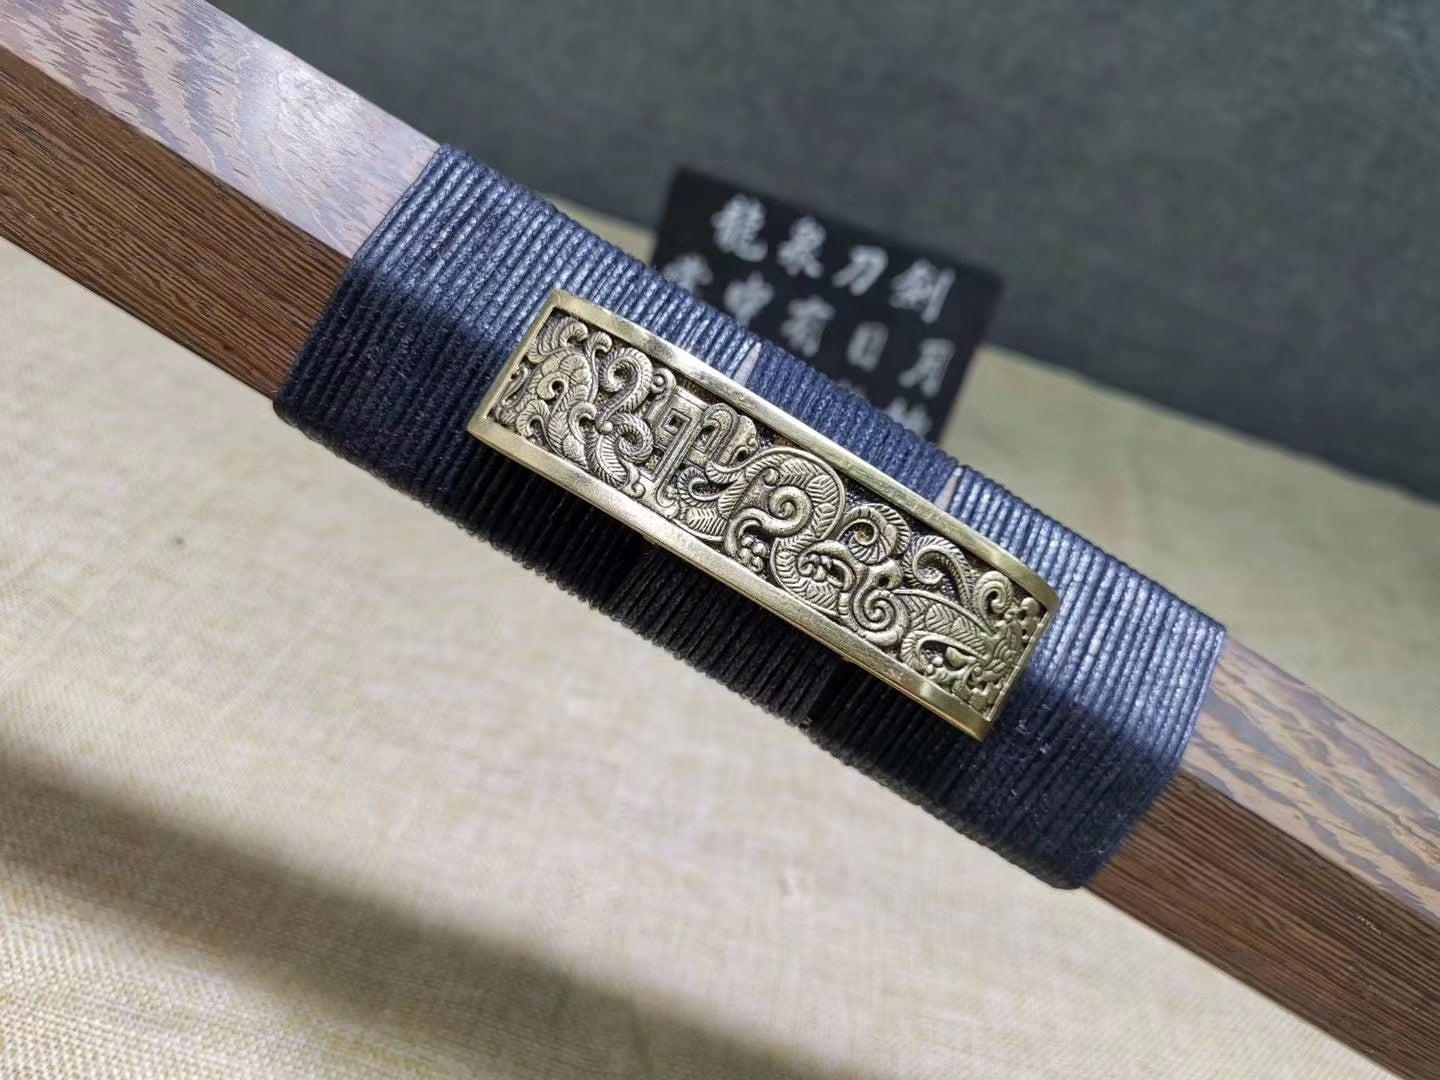 Han jian Swords,Handmade Art(Damascus Steel Blade,Brass Fittings) Heat Tempered,Full Tang,Chinese Sword - Chinese sword shop